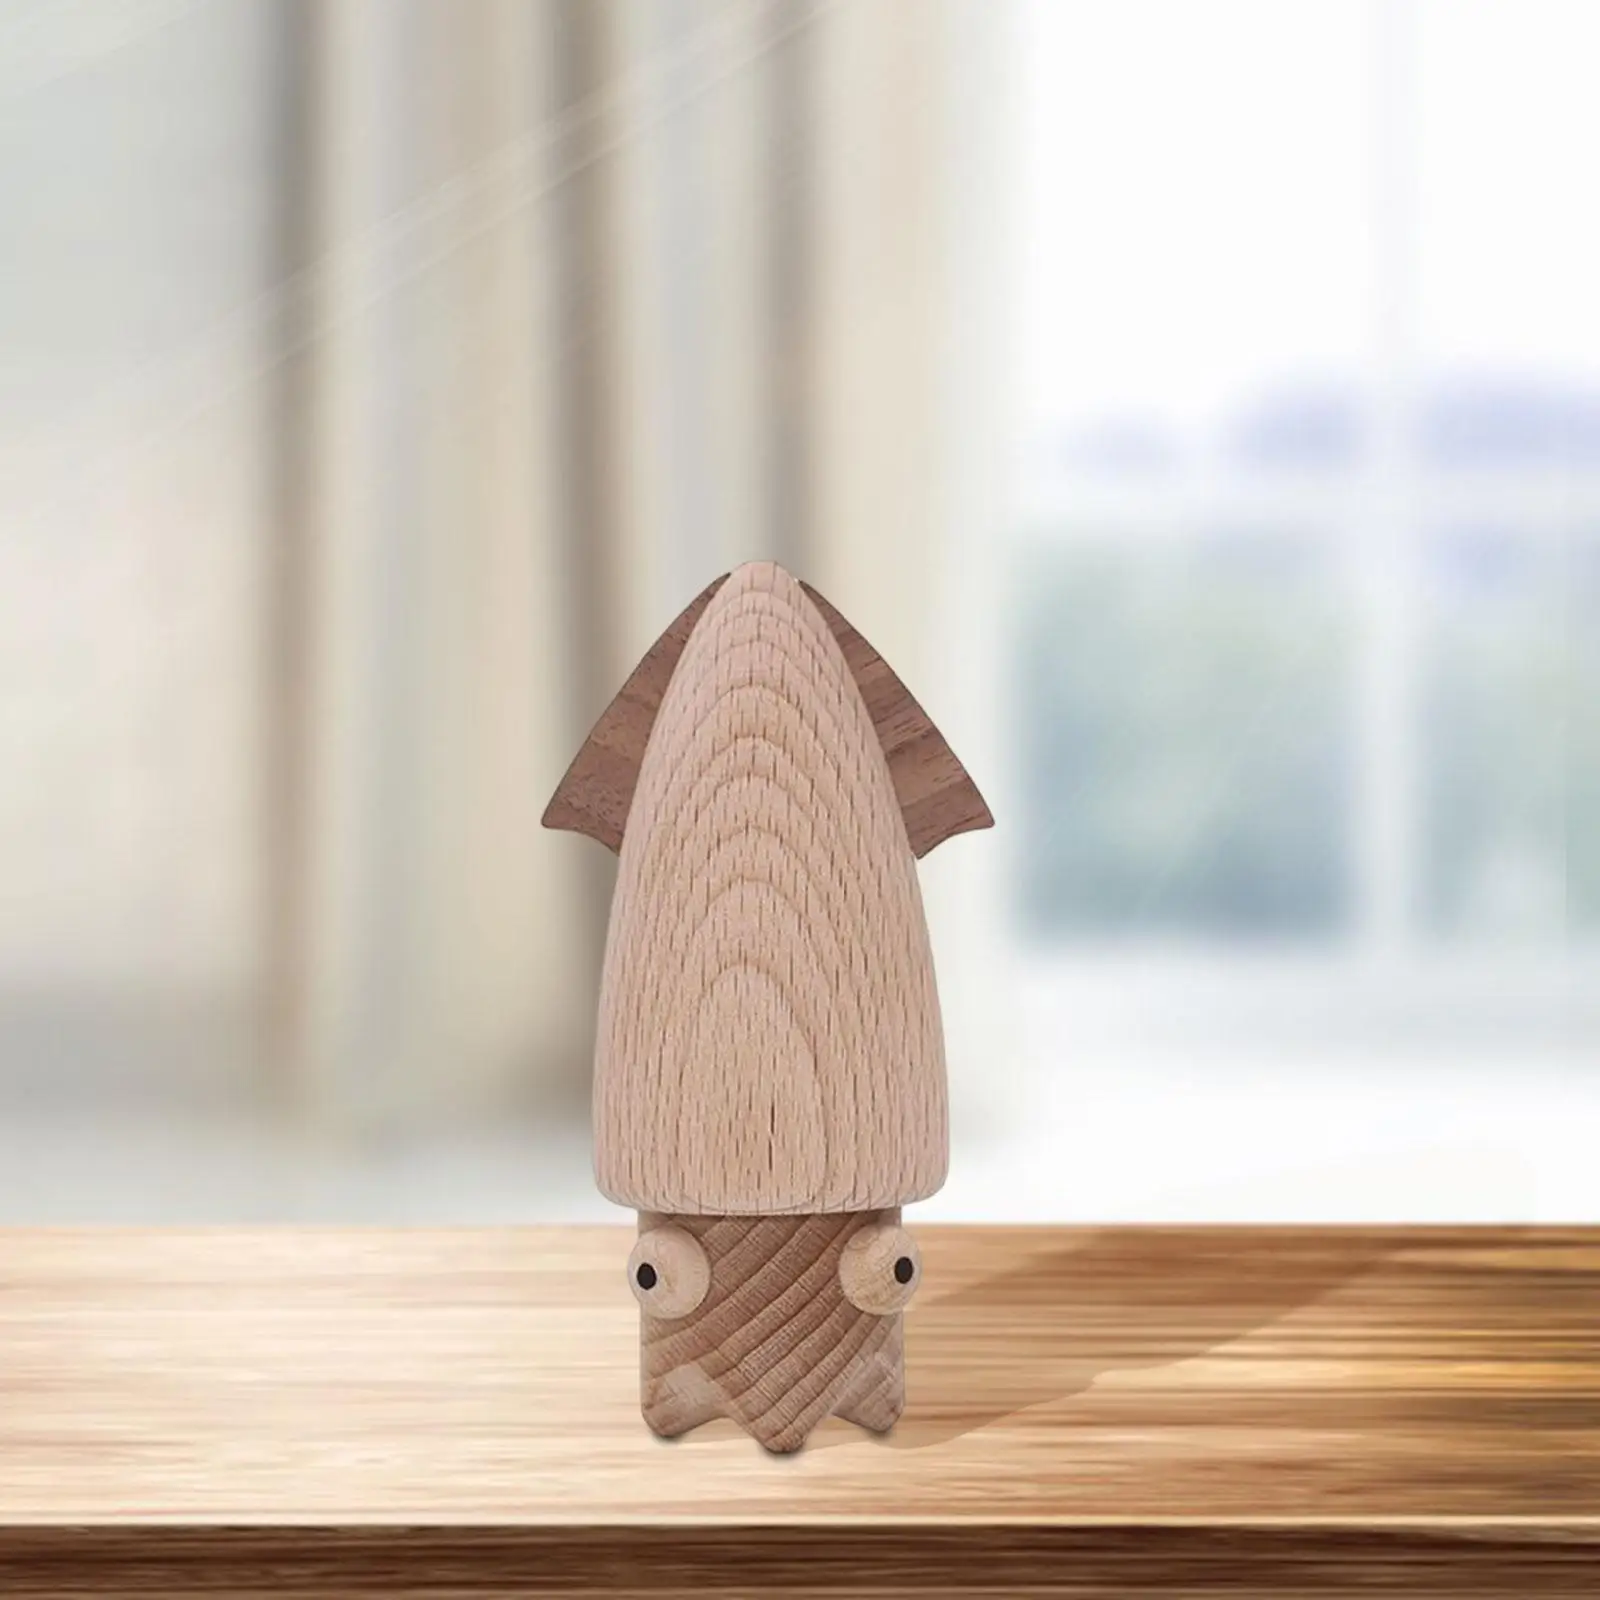 Funny Toothpick Holder Countertop Decor Ornament Squid Design Wood Organizer Dispenser for Restaurants Bars Kitchen Cafes Home